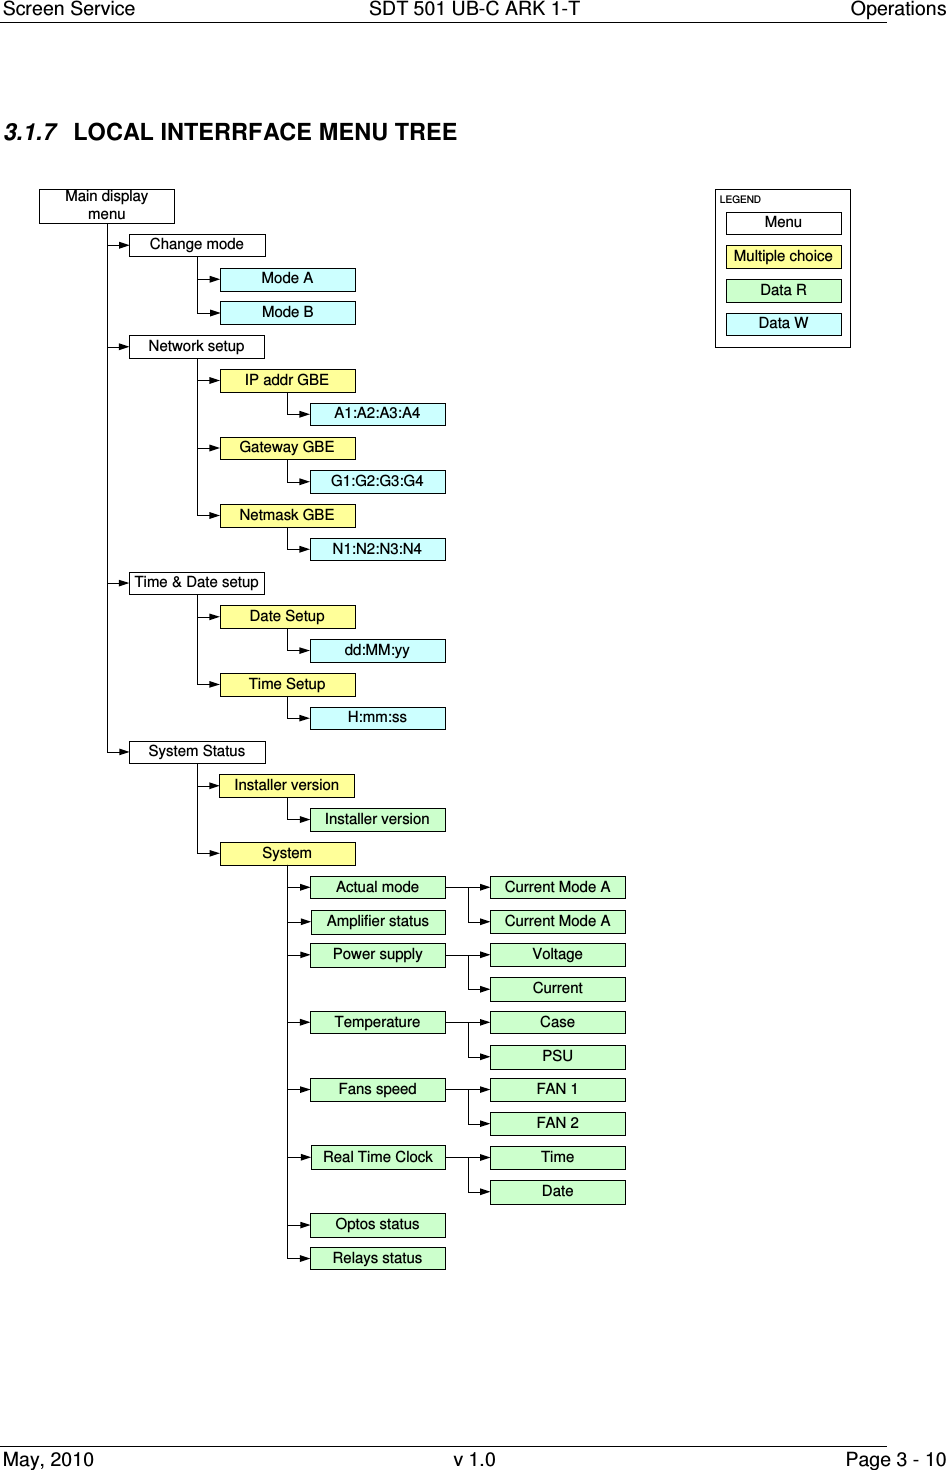 Screen Service  SDT 501 UB-C ARK 1-T  Operations May, 2010  v 1.0  Page 3 - 10   3.1.7  LOCAL INTERRFACE MENU TREE        Main display menuNetwork setupIP addr GBEGateway GBENetmask GBEA1:A2:A3:A4G1:G2:G3:G4N1:N2:N3:N4MenuMultiple choiceData RLEGENDData WTime &amp; Date setupDate SetupTime Setupdd:MM:yyH:mm:ssSystem StatusSystemActual modeAmplifier statusPower supplyTemperatureFans speedReal Time ClockOptos statusRelays statusCurrent Mode ACurrent Mode AVoltageCurrentCasePSUFAN 1FAN 2TimeDateInstaller versionInstaller versionChange modeMode AMode B